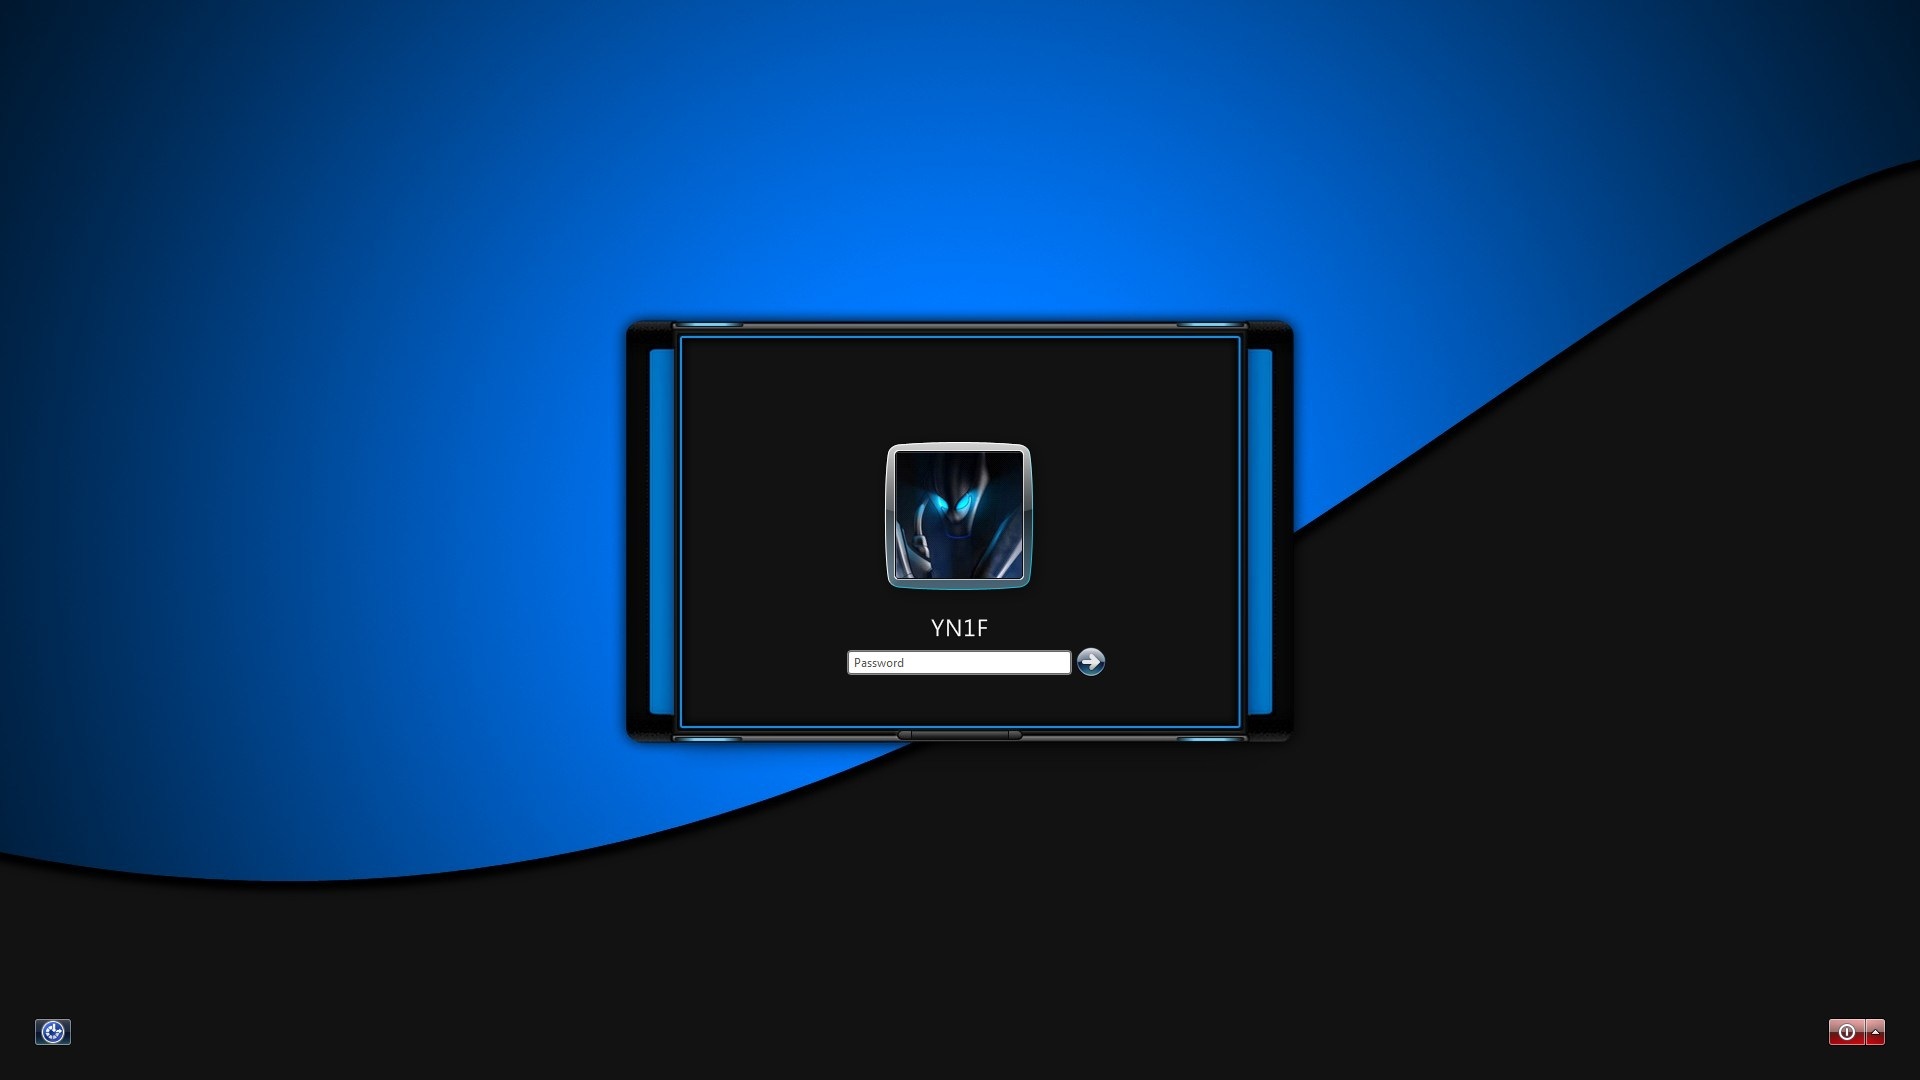 Windows 7 Logon Screen Image